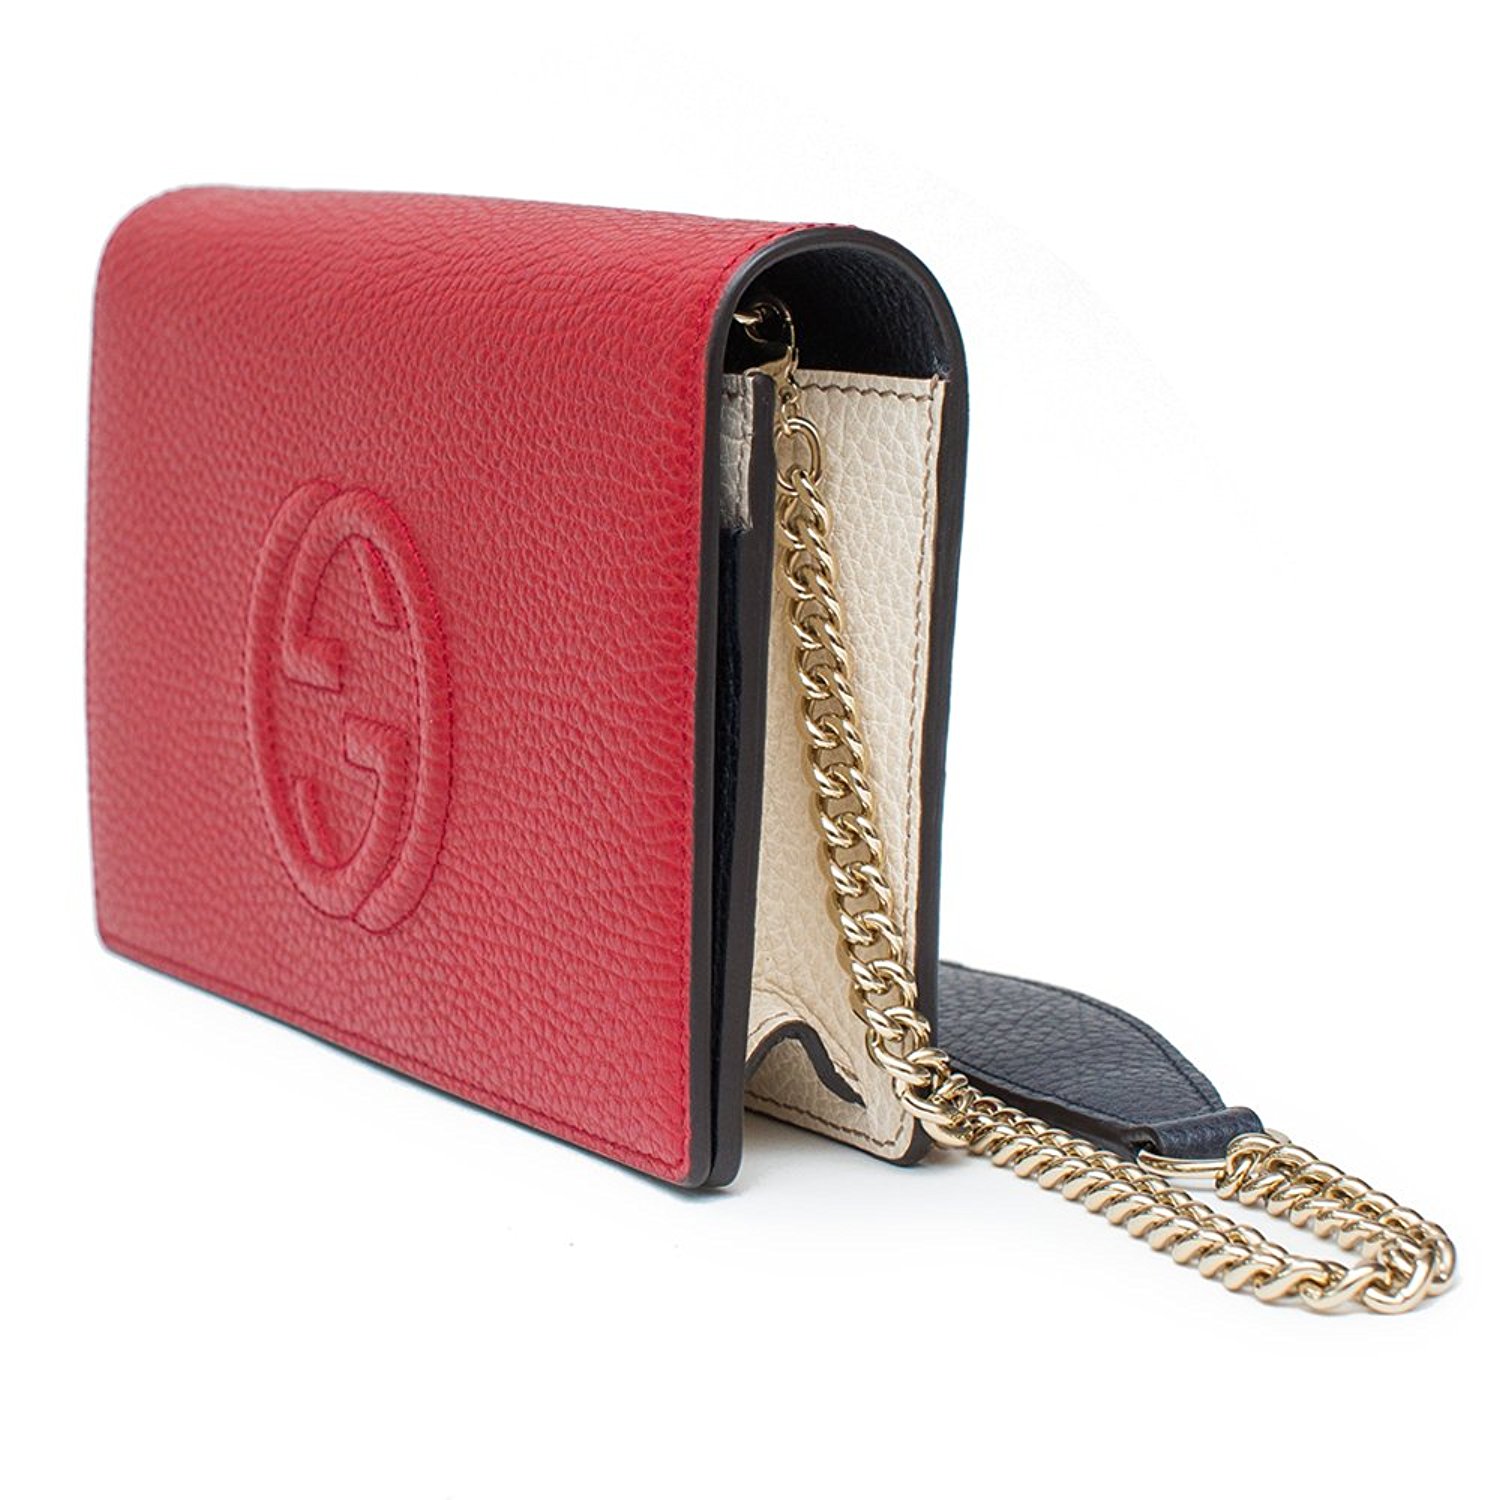 Gucci Soho Mini Black Round Light Gold Disco Zip Italy Leather Handbag Bag New - image 3 of 6